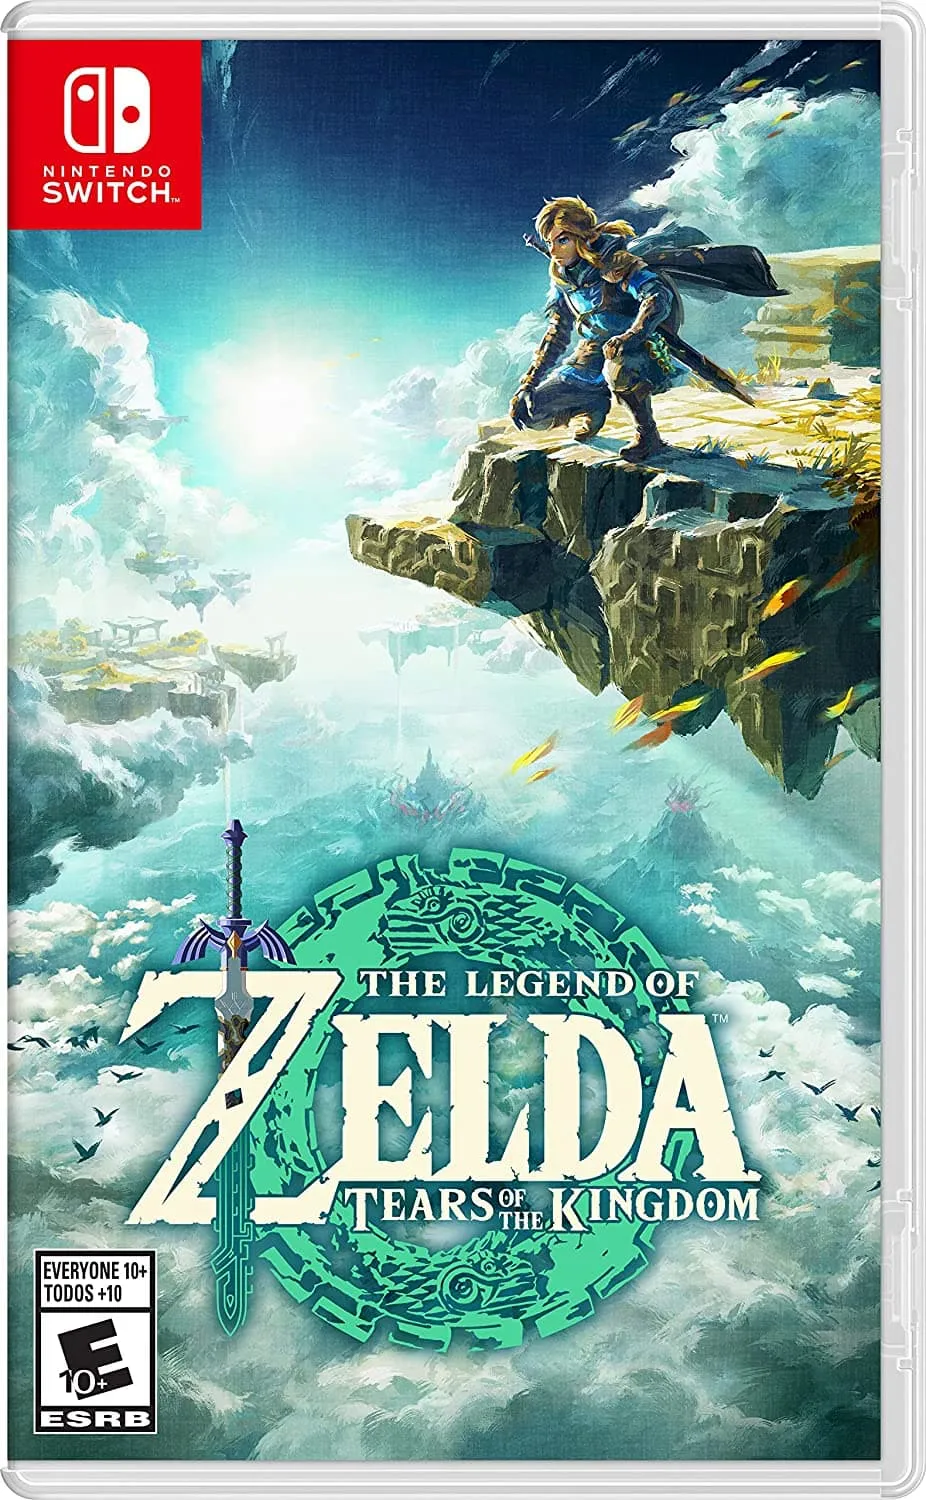 The Legend of Zelda: Tears of the Kingdom Nintendo Switch artwork.